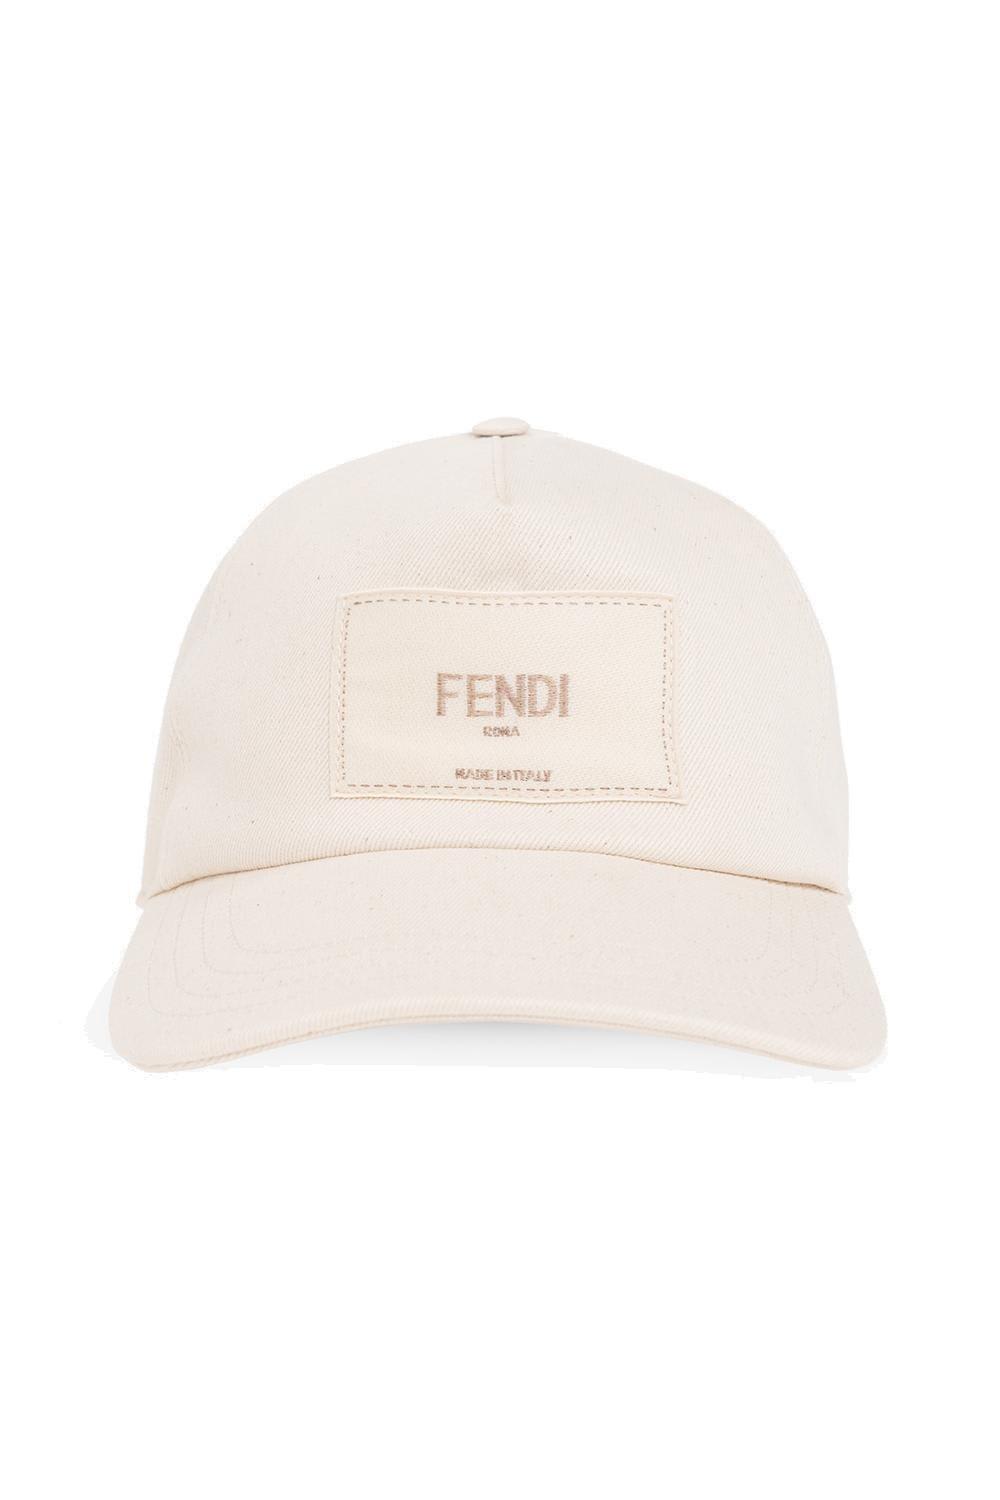 Fendi Logo Embroidered Baseball Cap